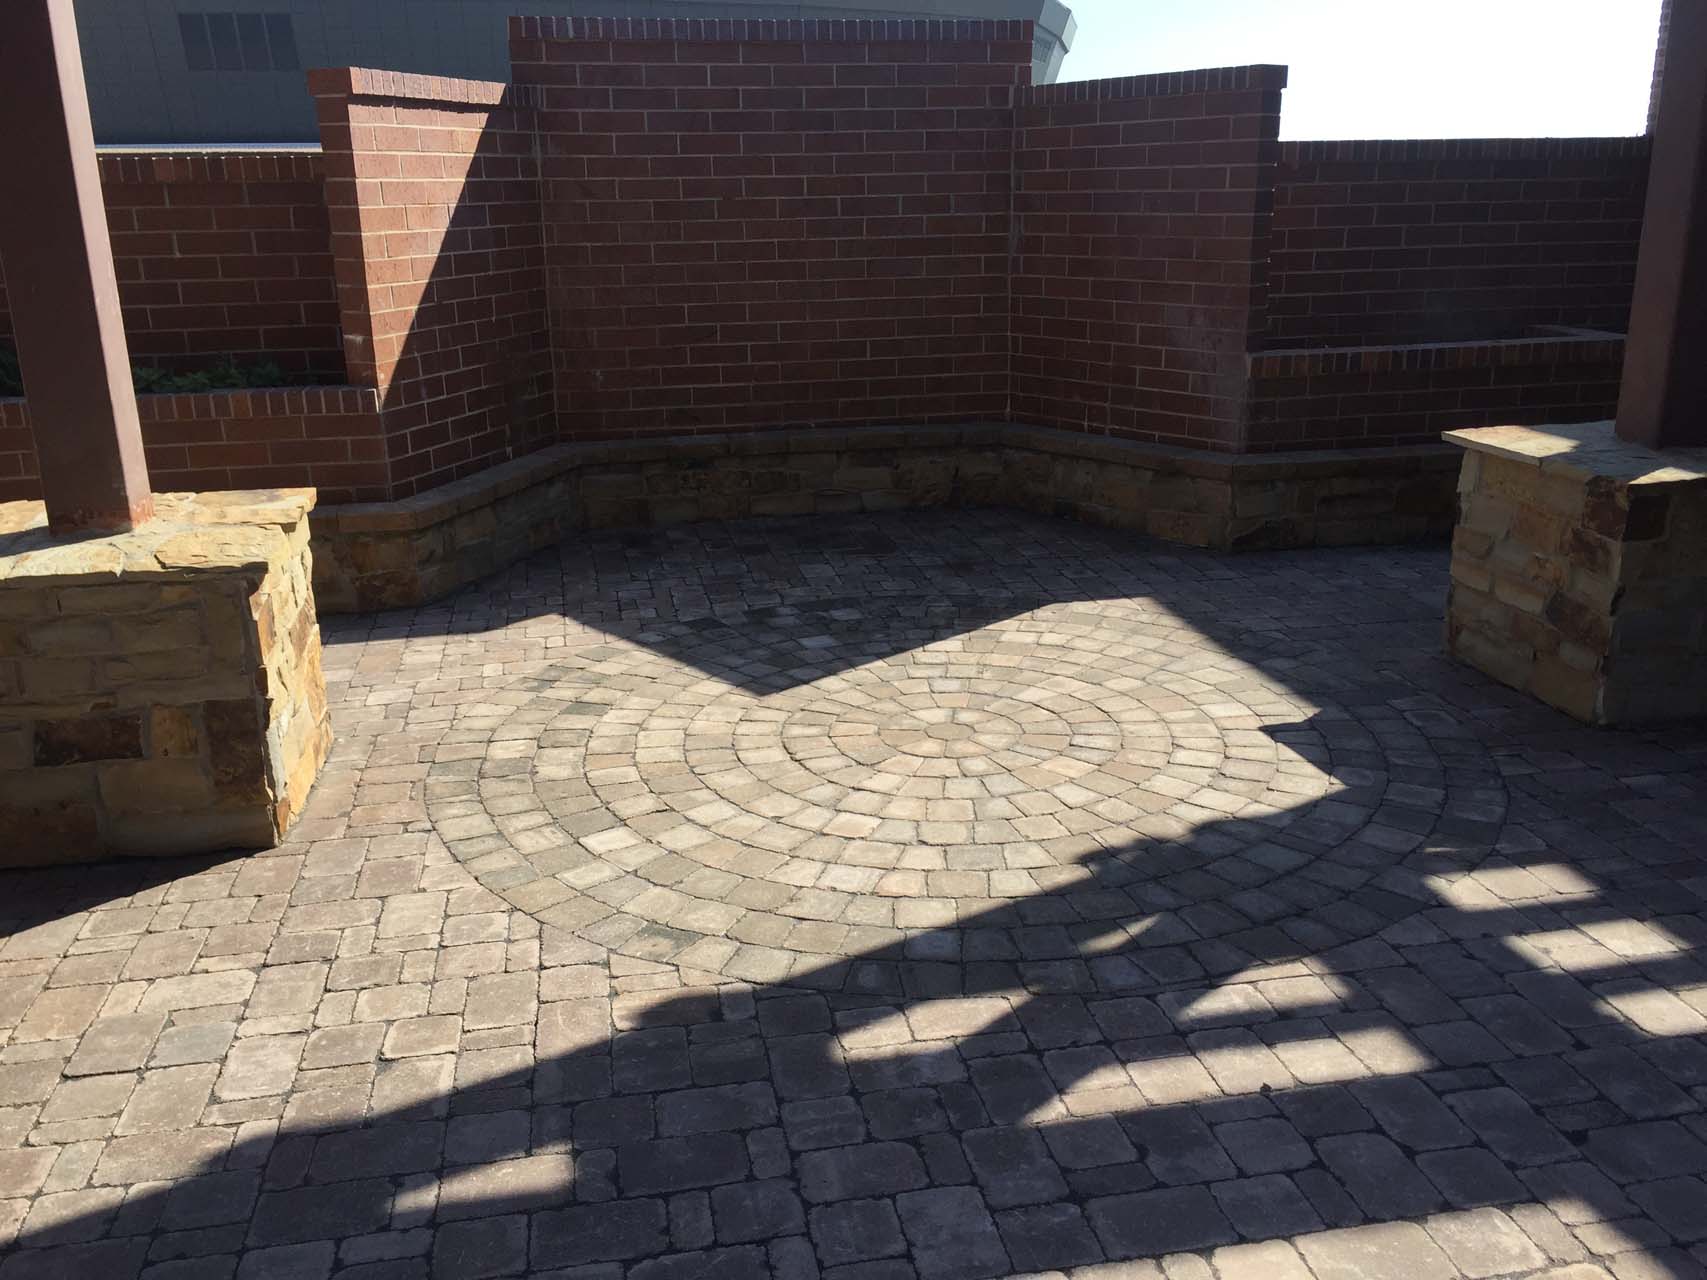 Brick patio space